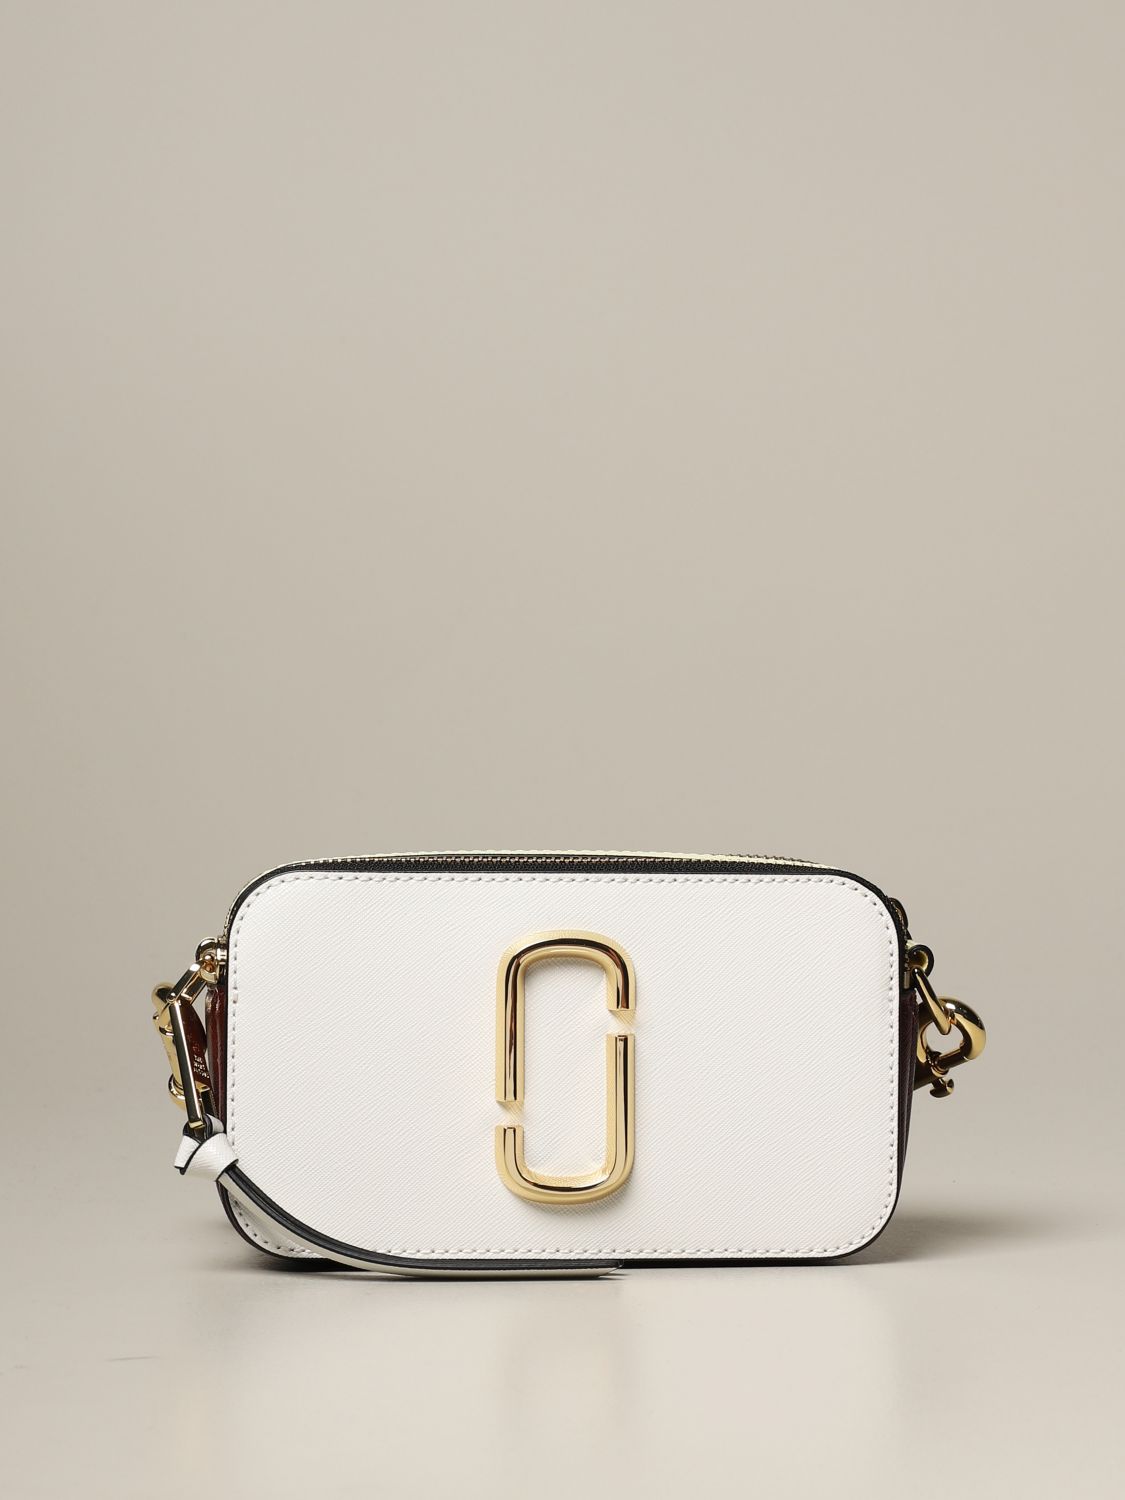 MARC JACOBS: The Snapshot multicolor bag - Lilac  Marc Jacobs handbag  M0012007 online at